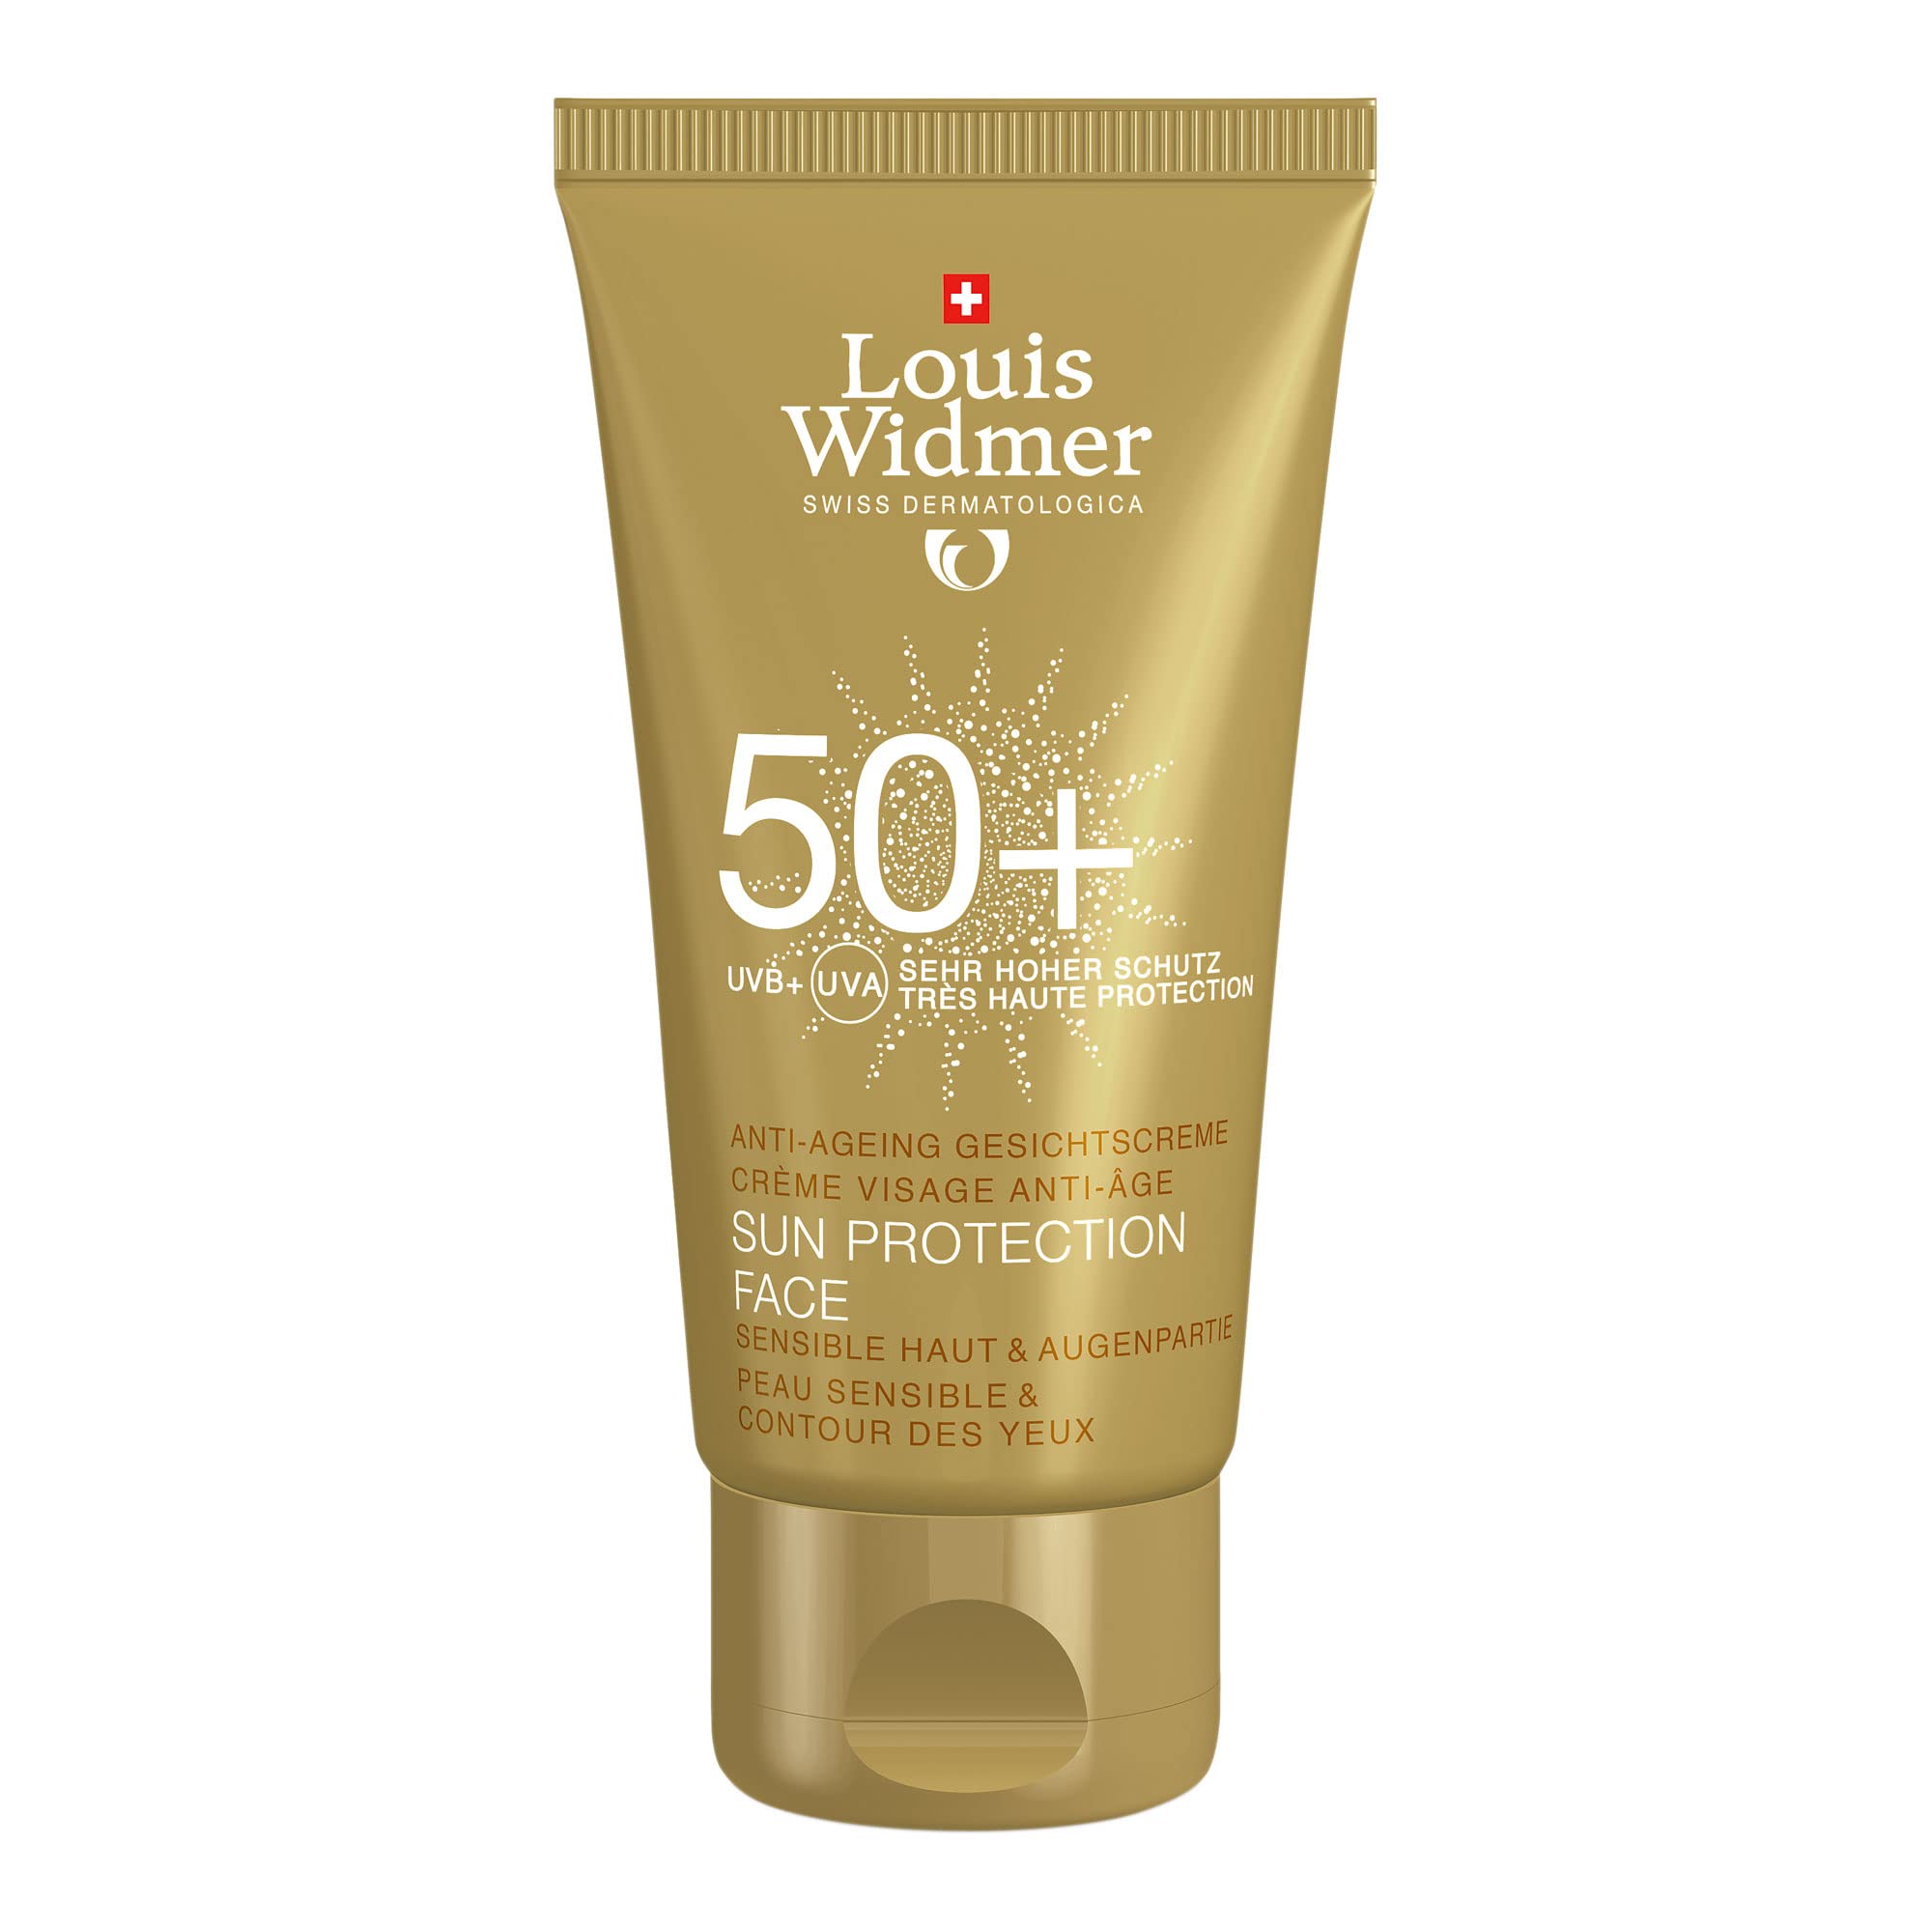 Widmer Sun Protection Face Creme 50+ leicht parf�miert, 50 m